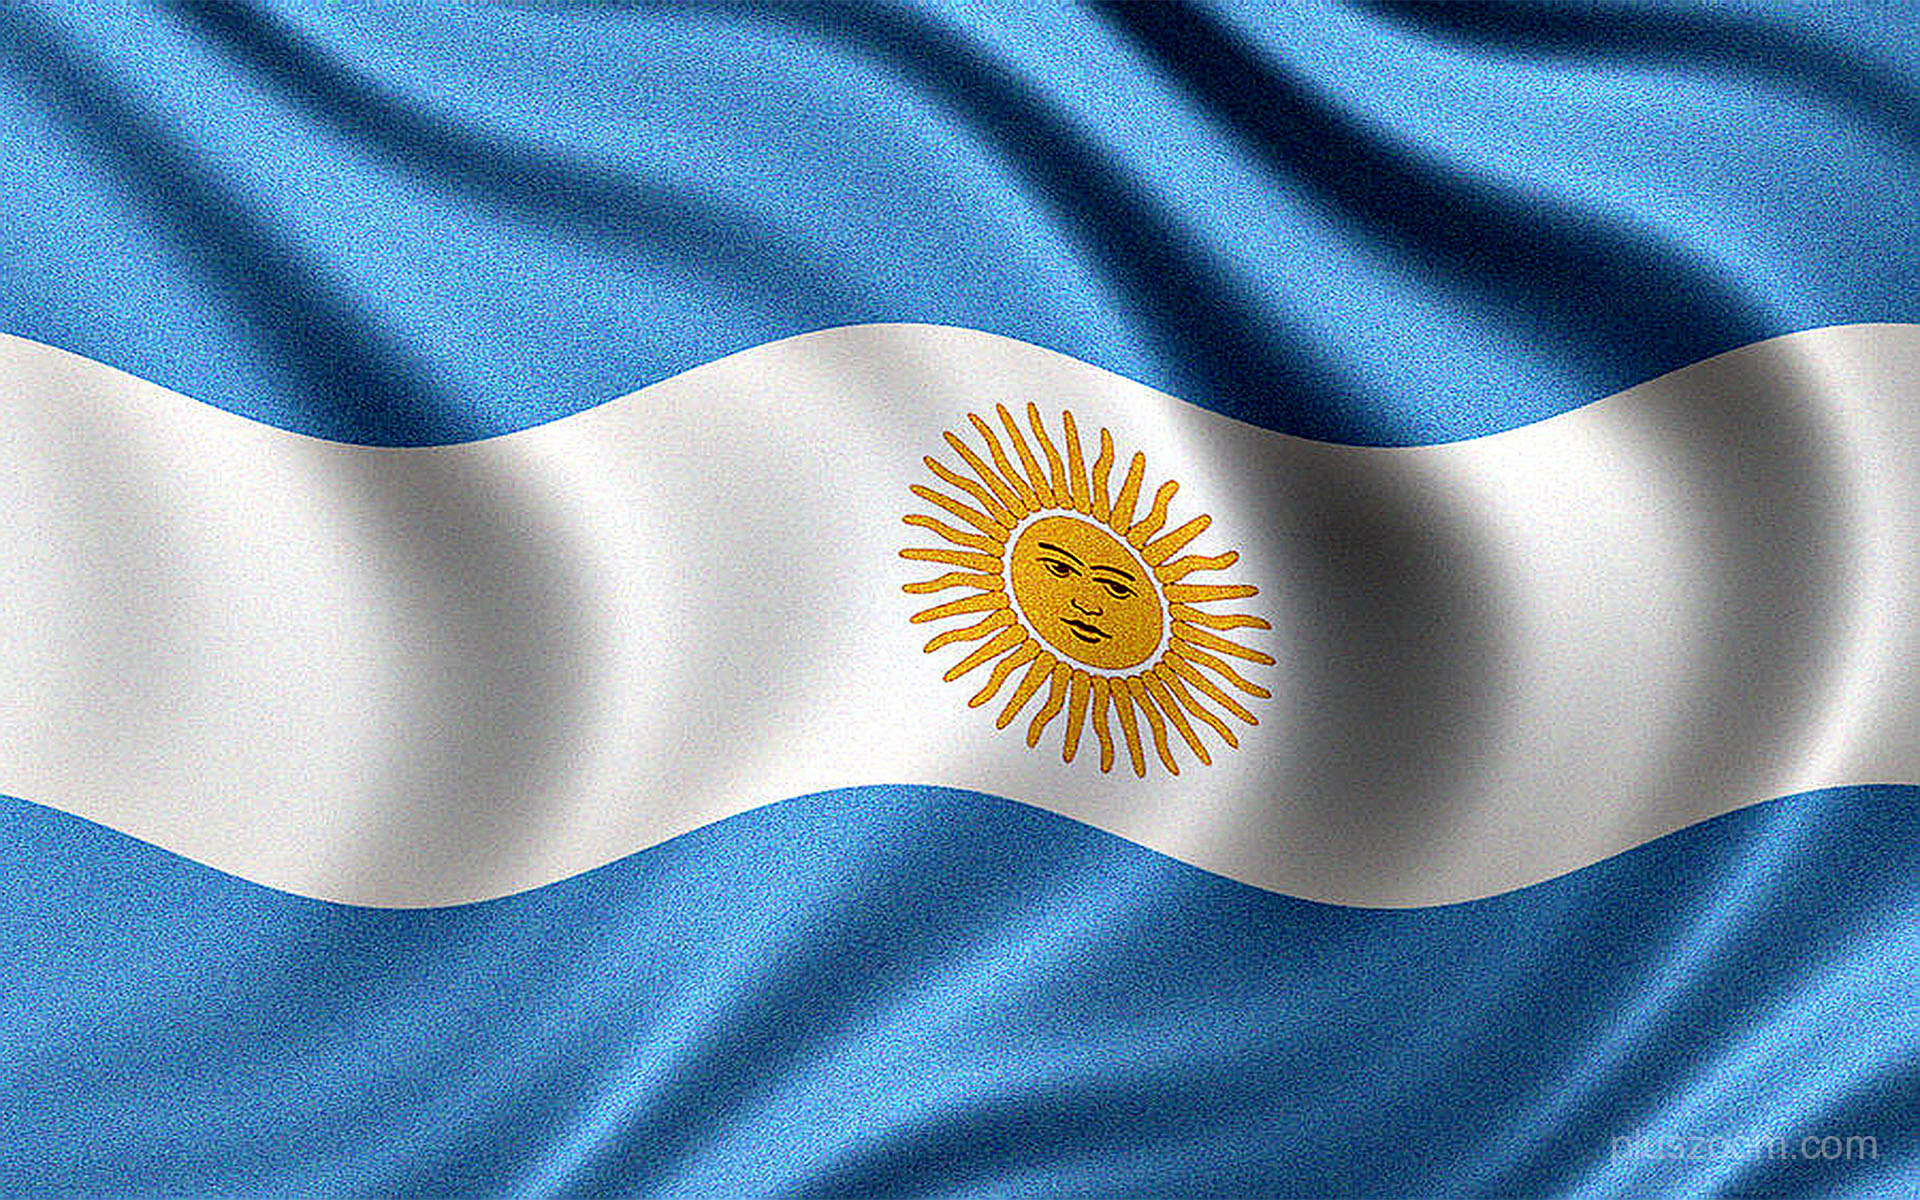 Argentina Logo Wallpapers - Wallpaper Cave